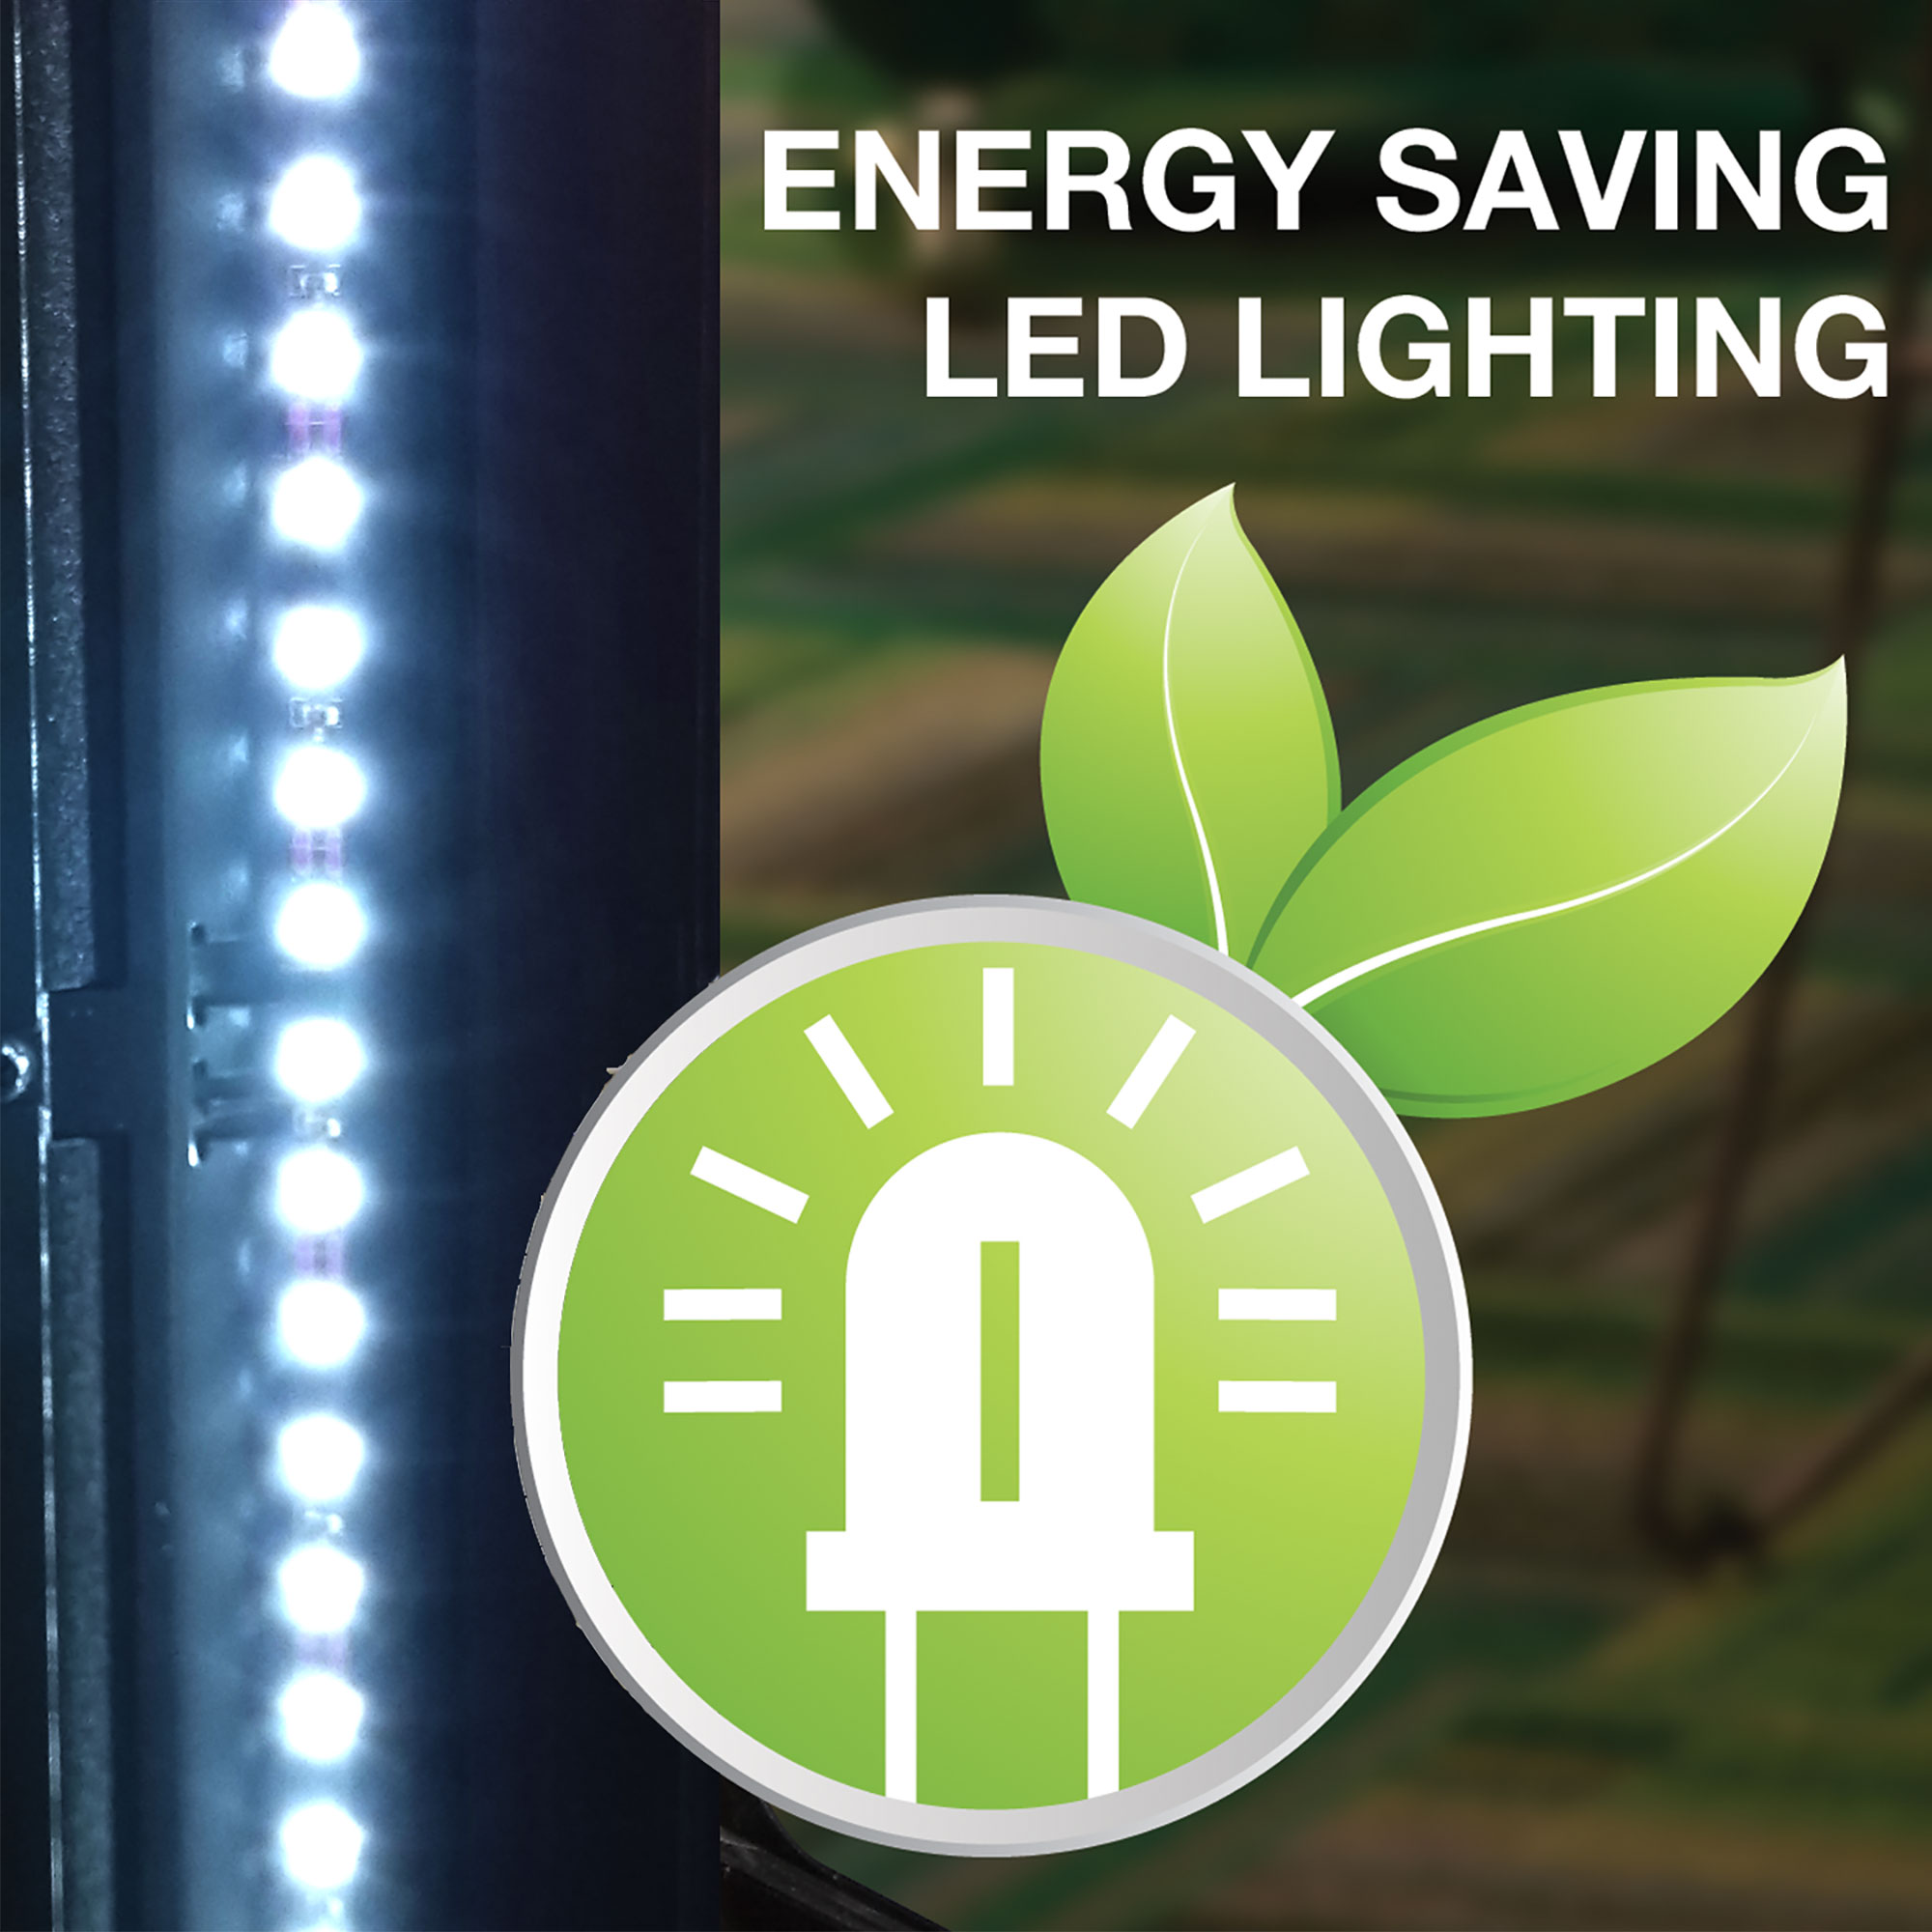 Enhance the product display on your vending equipment by adding energy-saving, enhanced LED lighting.